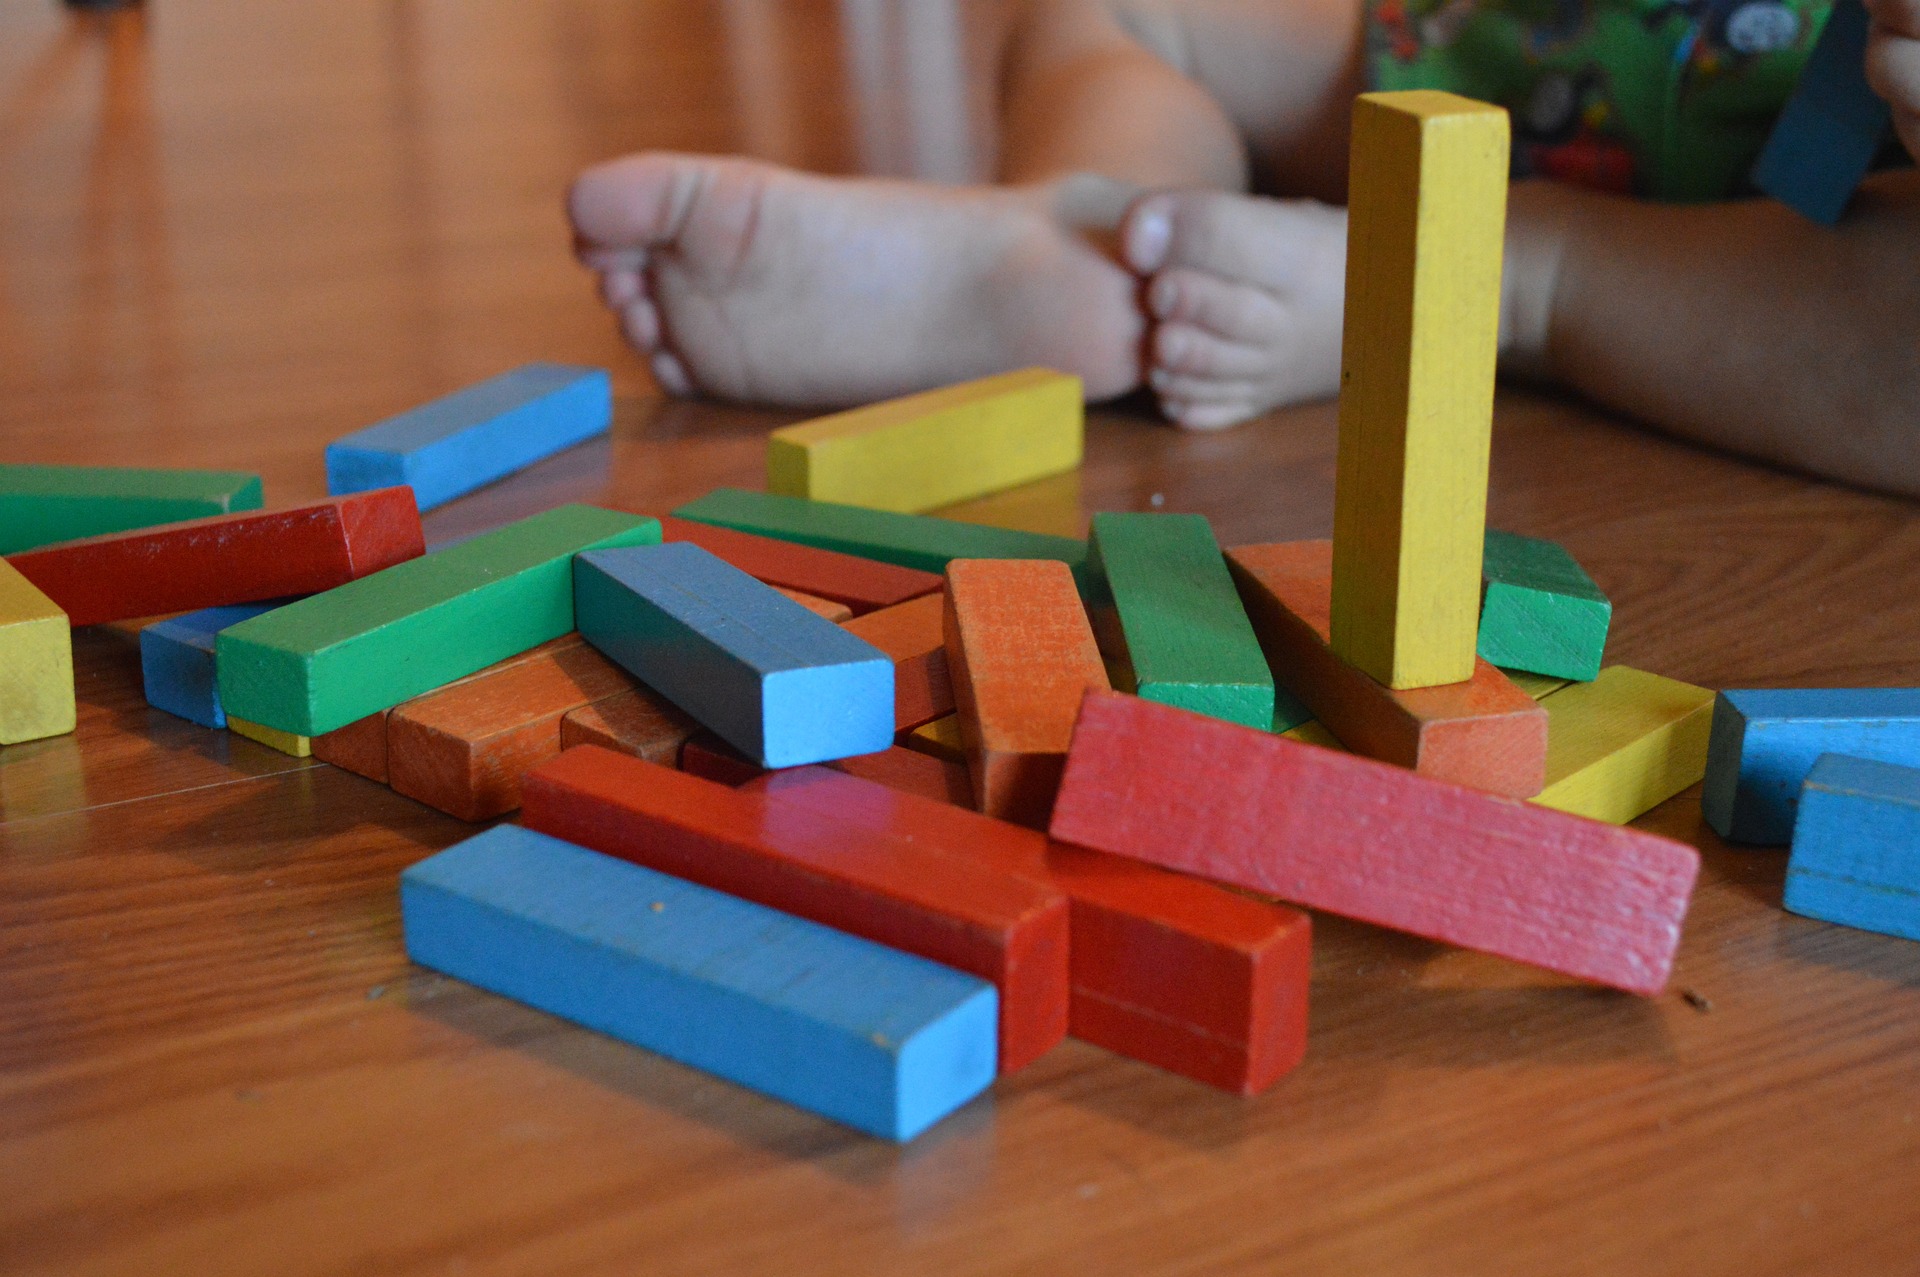 blocs construction enfant.jpg